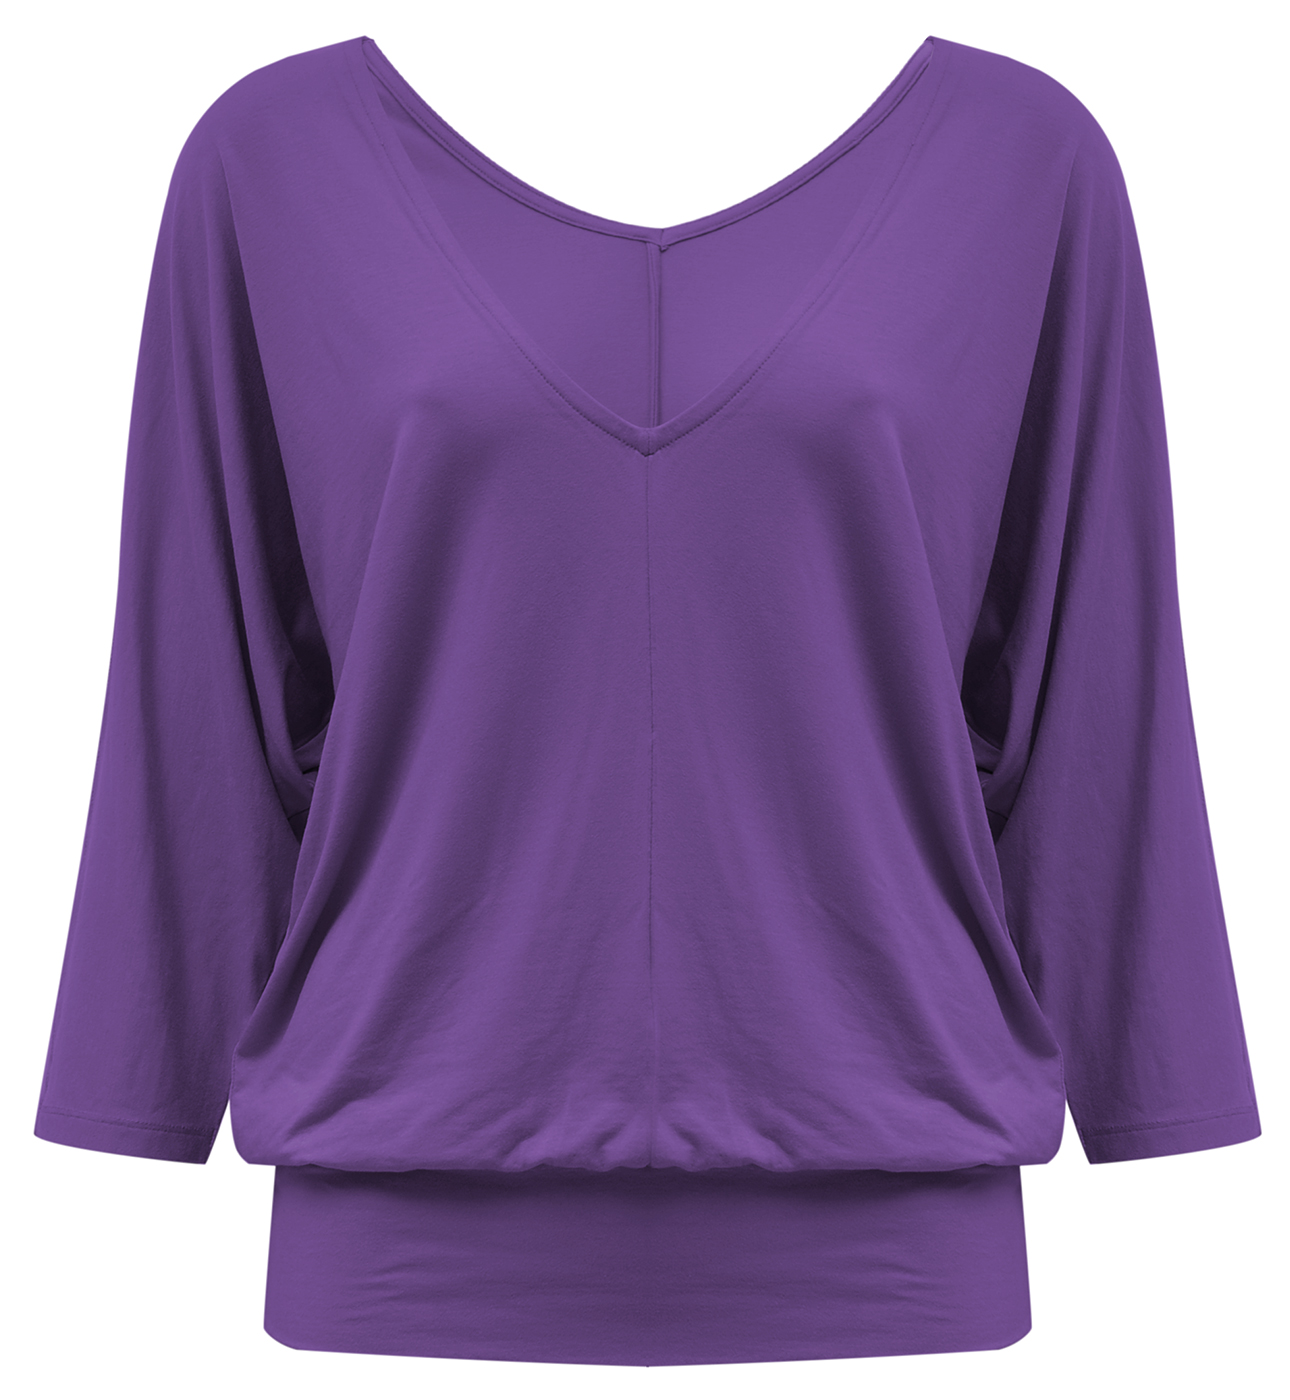  Yoga shirt Sarasvati - purple